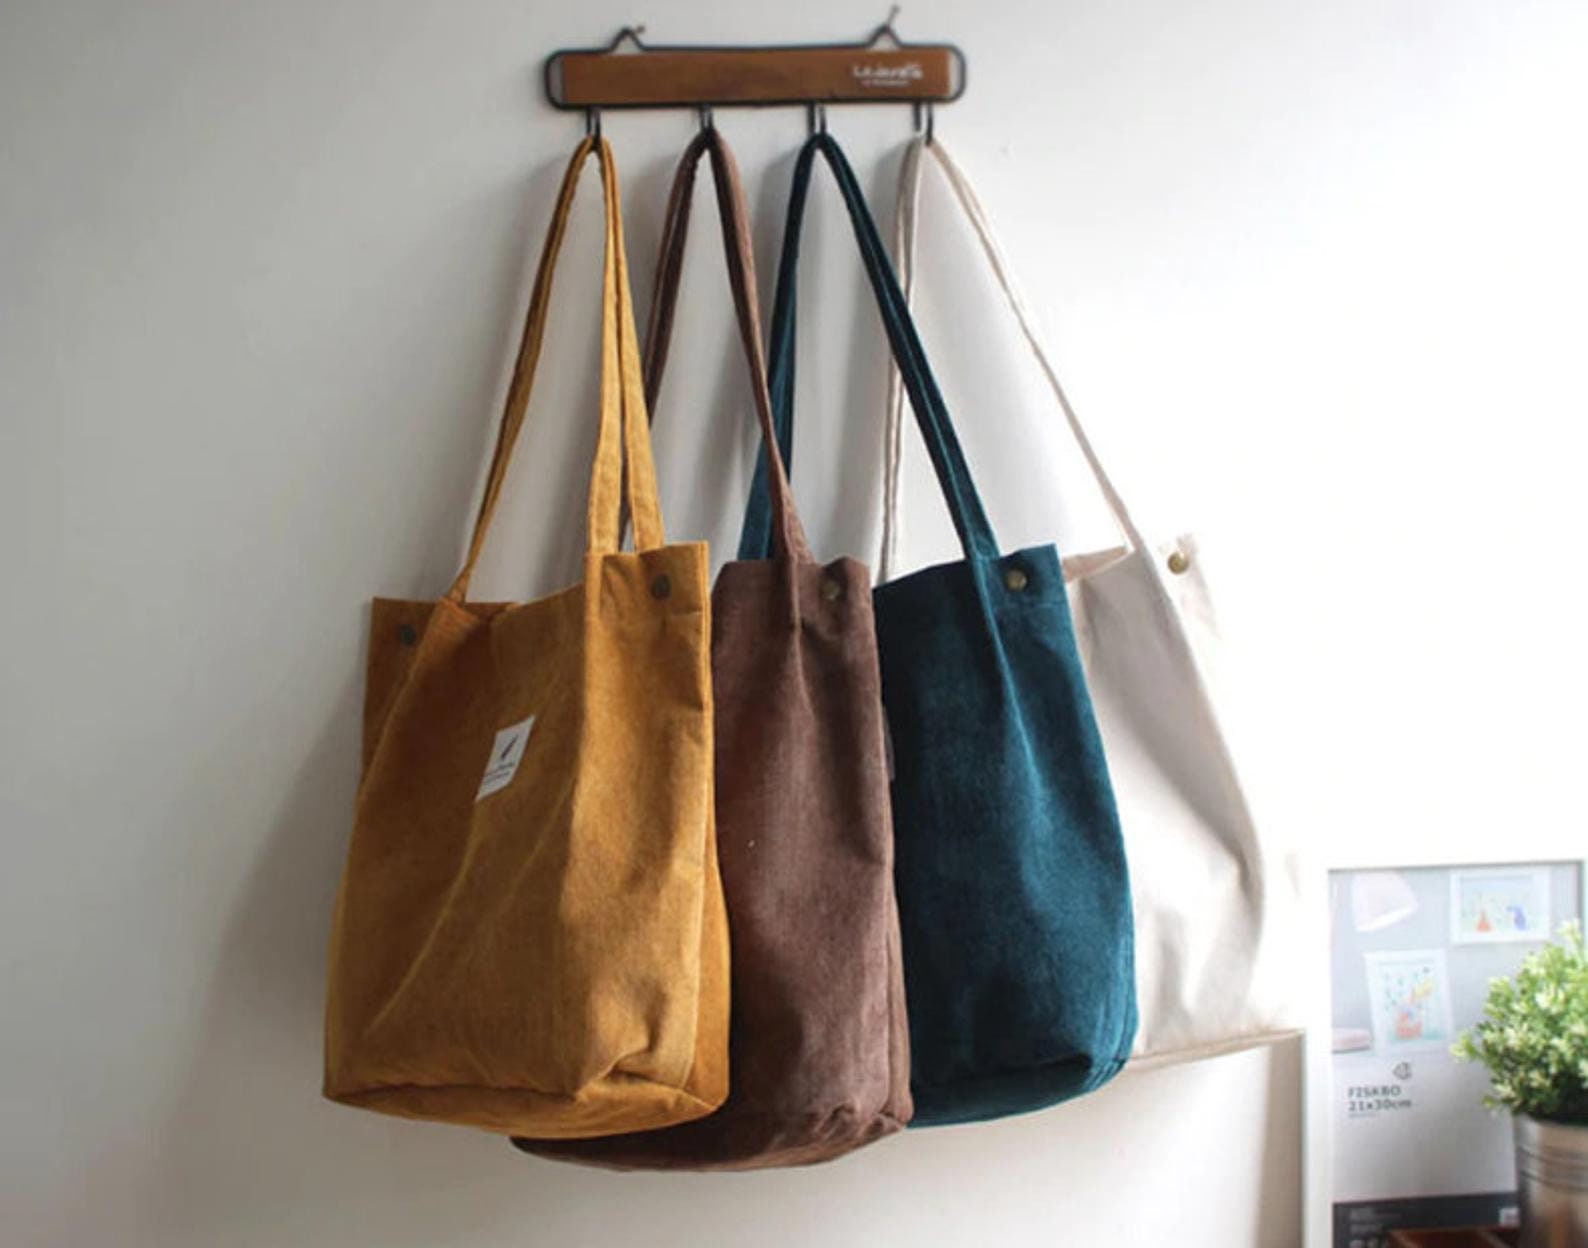 Velvet Shopping Bag Feminist Tote Bag Eco Friendly Beach Bag Women Corduroy Tote Bag Reusable Grocery Bag Eco Bag Zipper Shoulder Bag